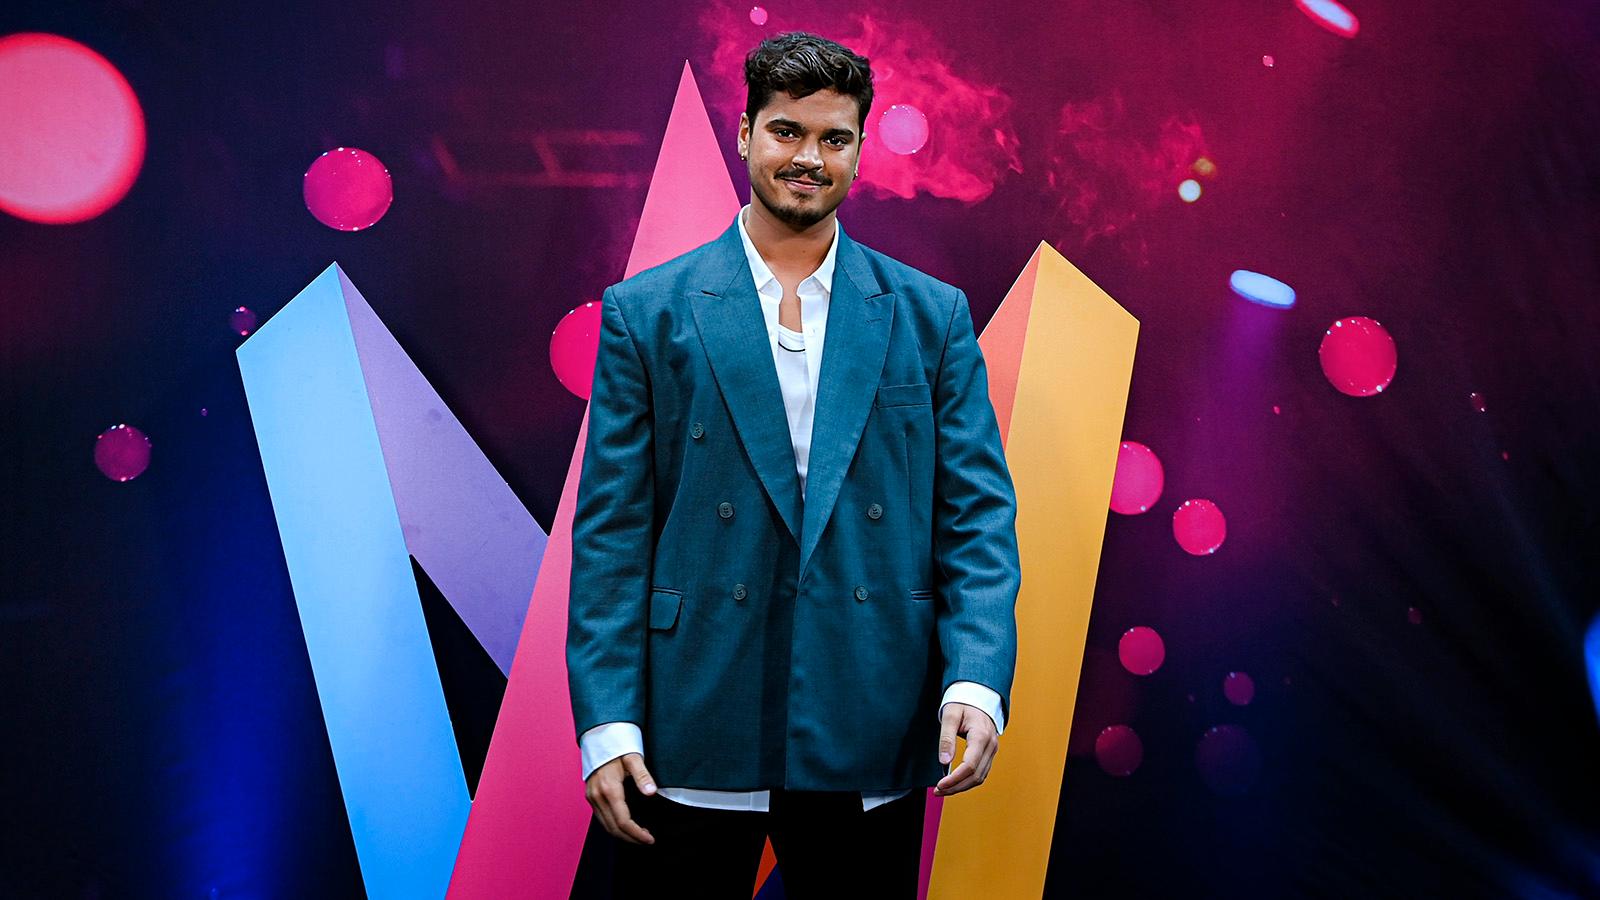 Oscar Zia leder Melodifestivalen 2022.